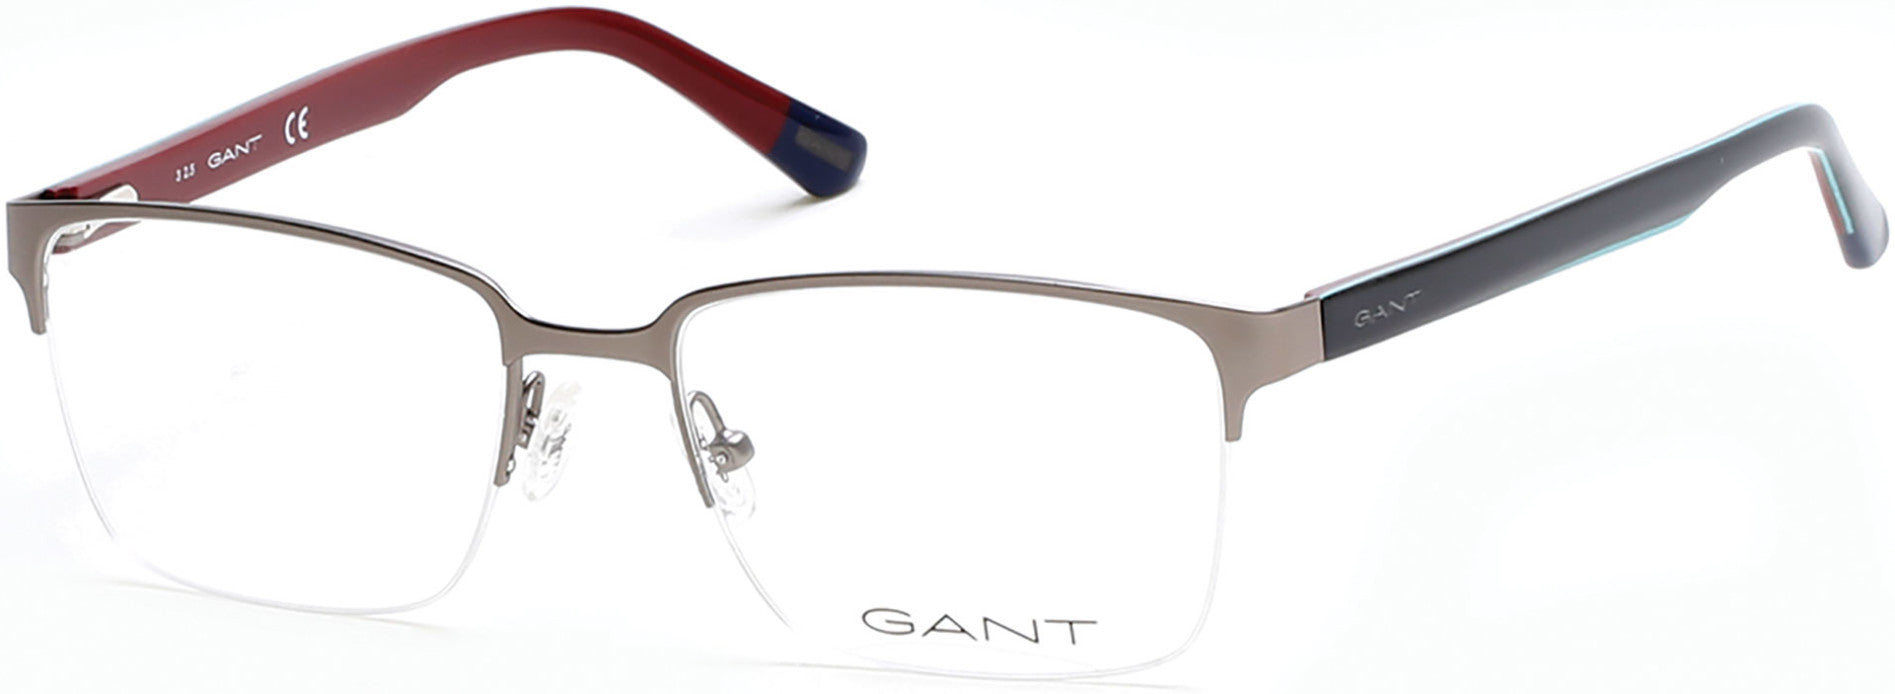 Gant GA3111 Square Eyeglasses 009-009 - Matte Gunmetal